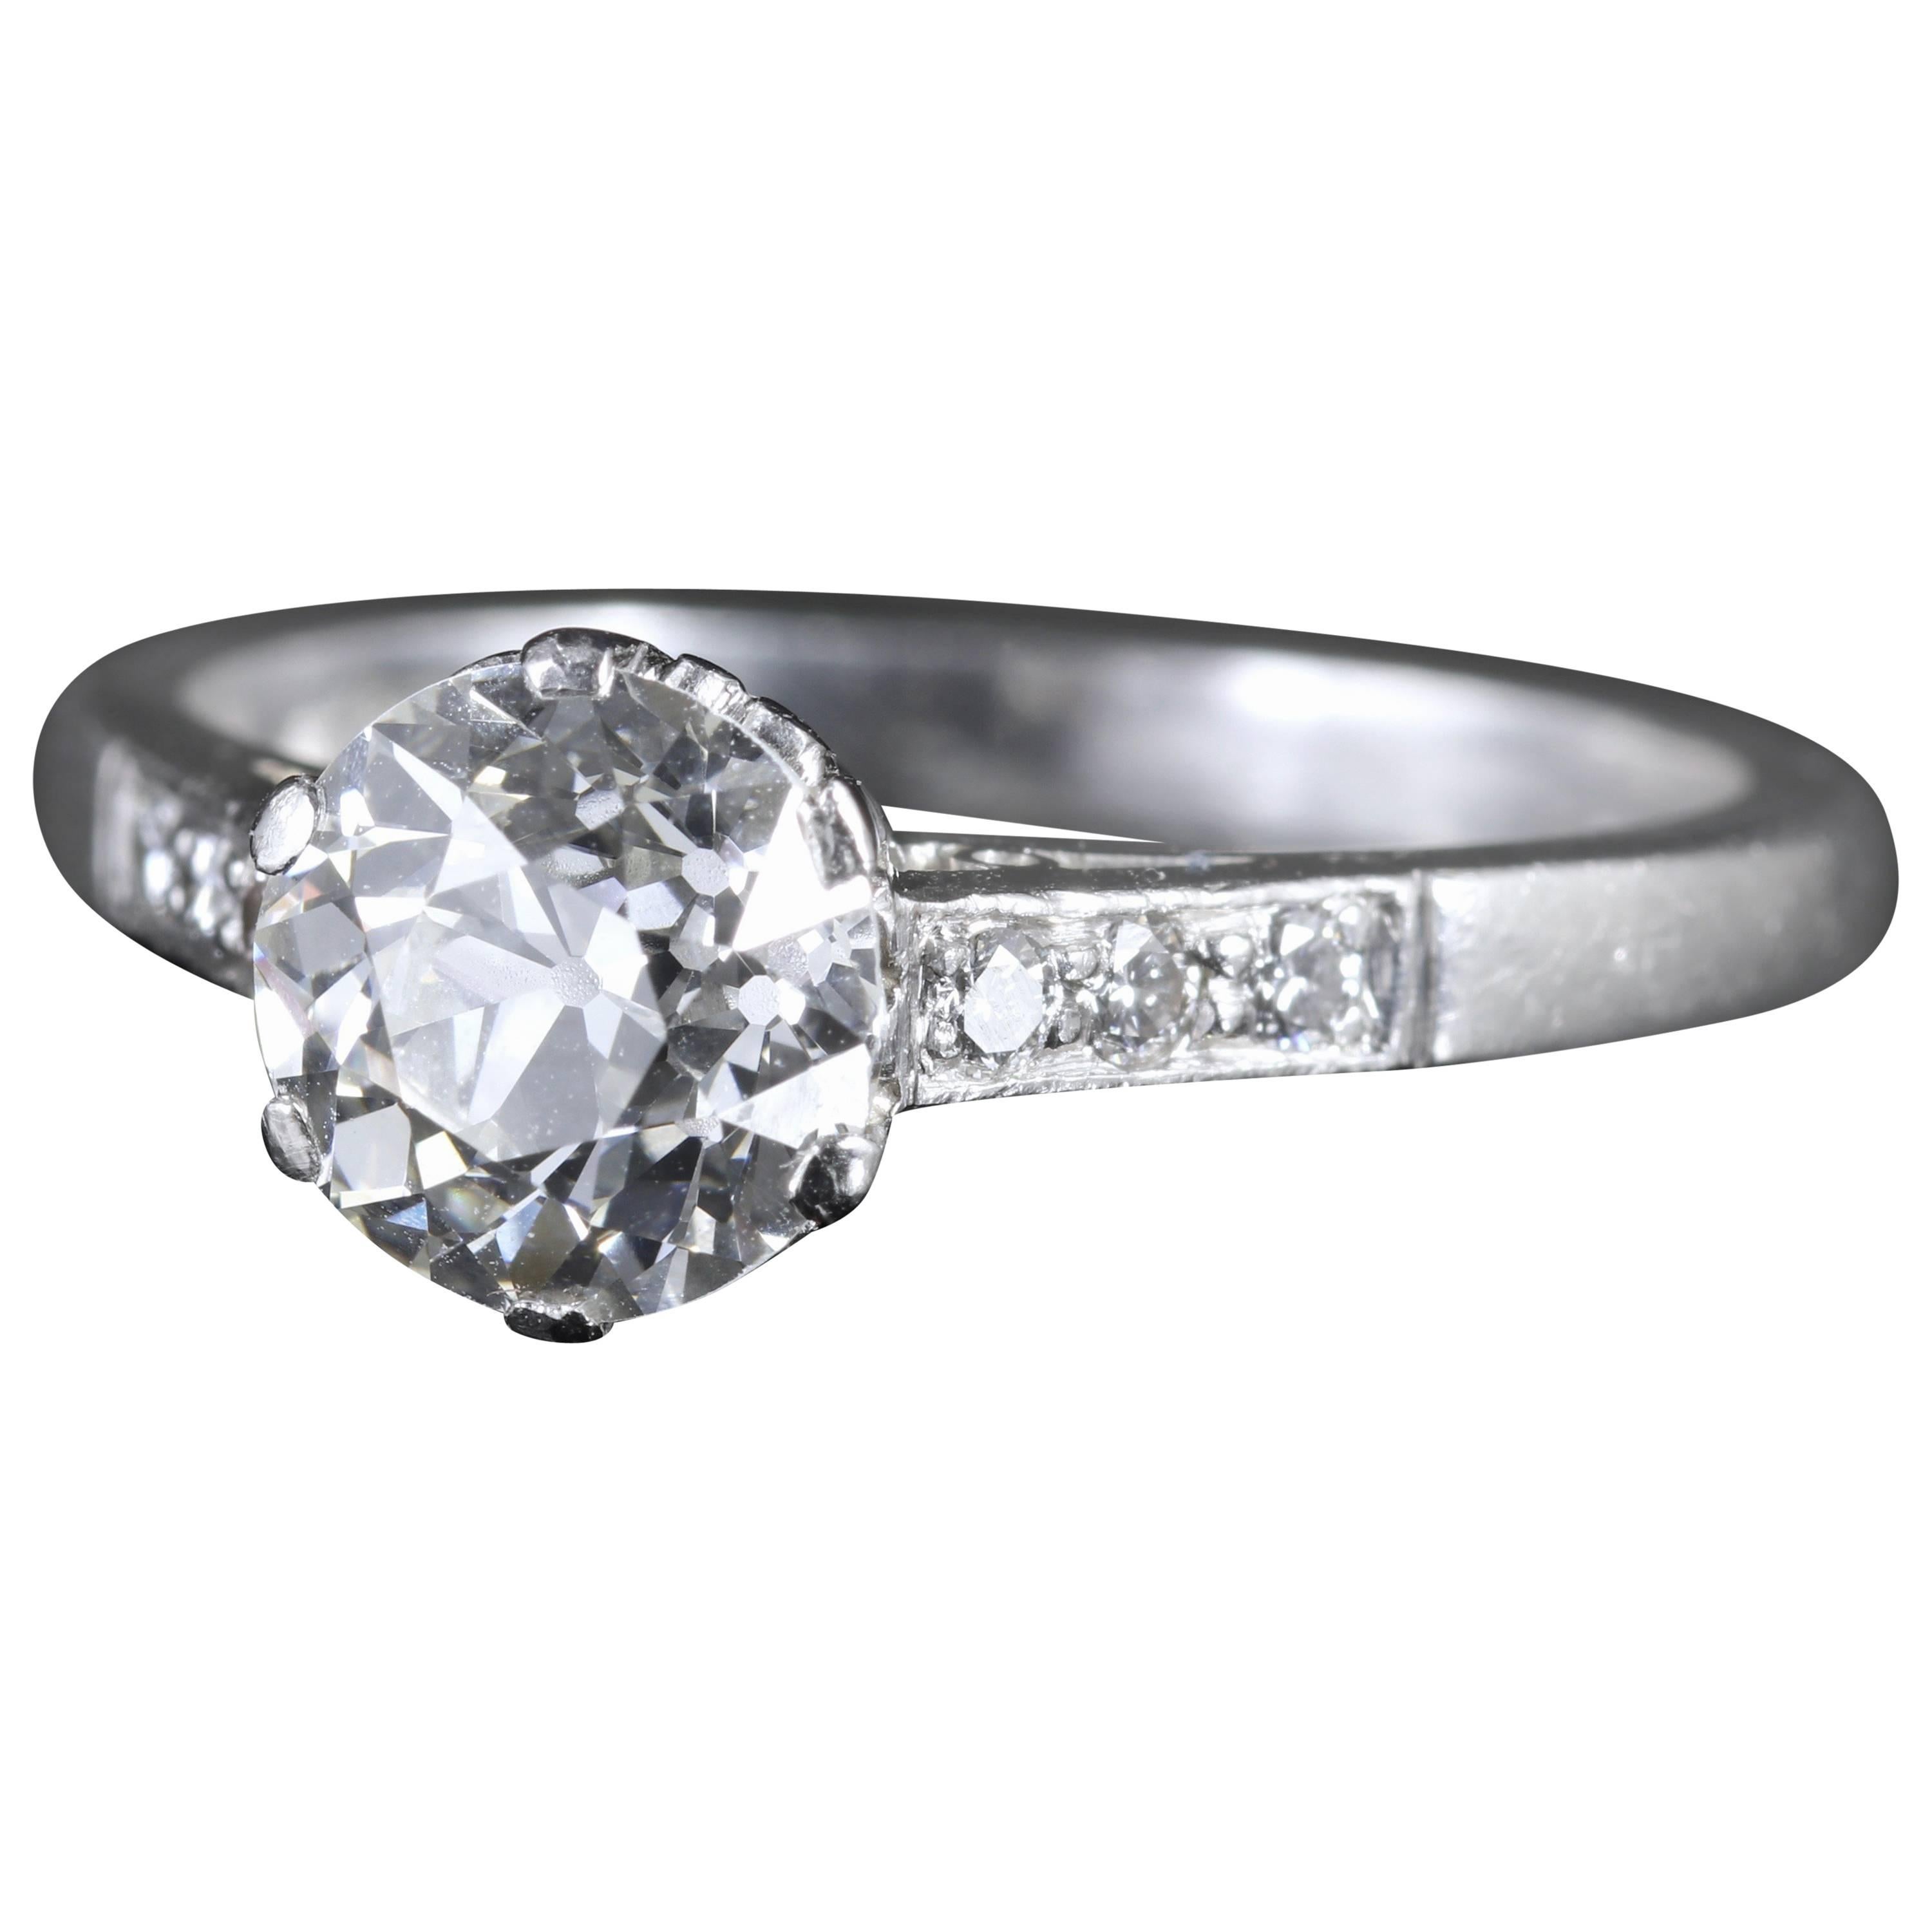 Antique Edwardian Platinum 1.58 Carat Solitaire Diamond Ring, circa 1915 For Sale